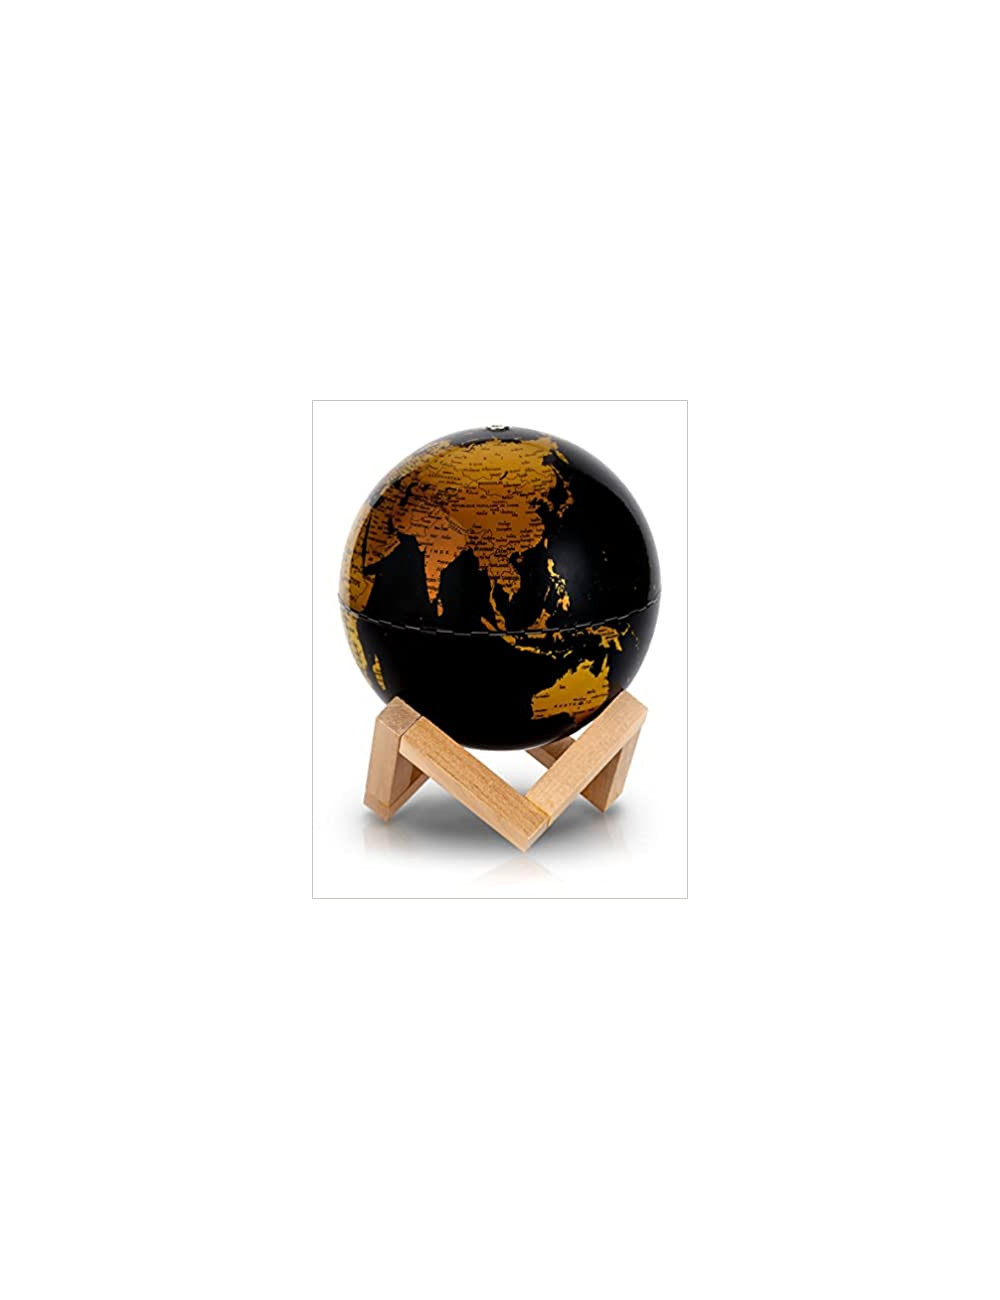 globe terrestre lumineux 34 Cm